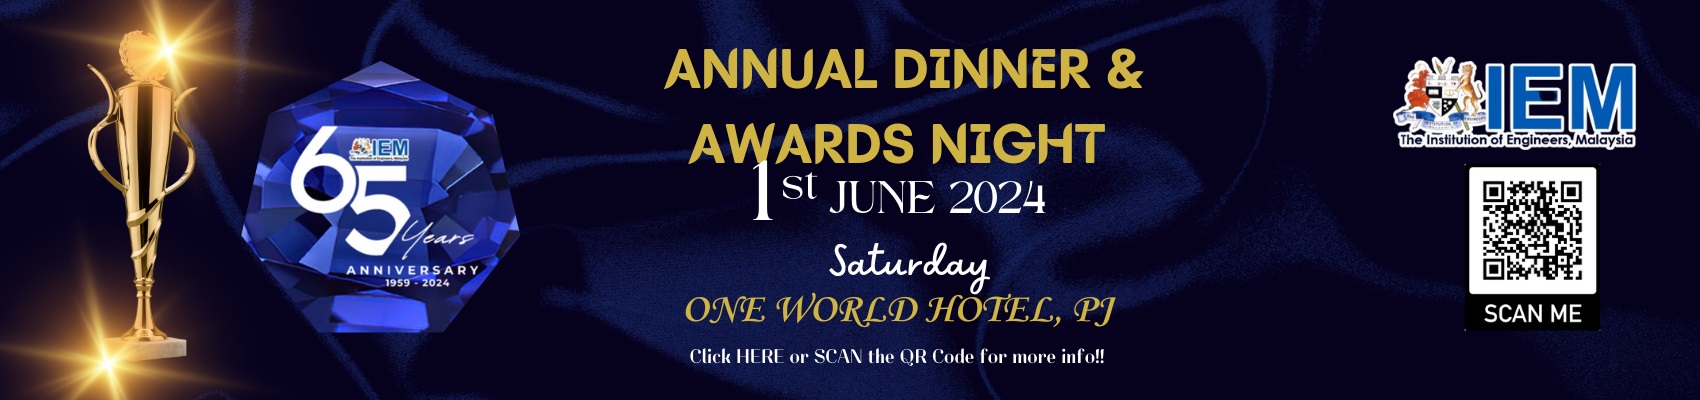 65th IEM Annual Dinner & Awards Night